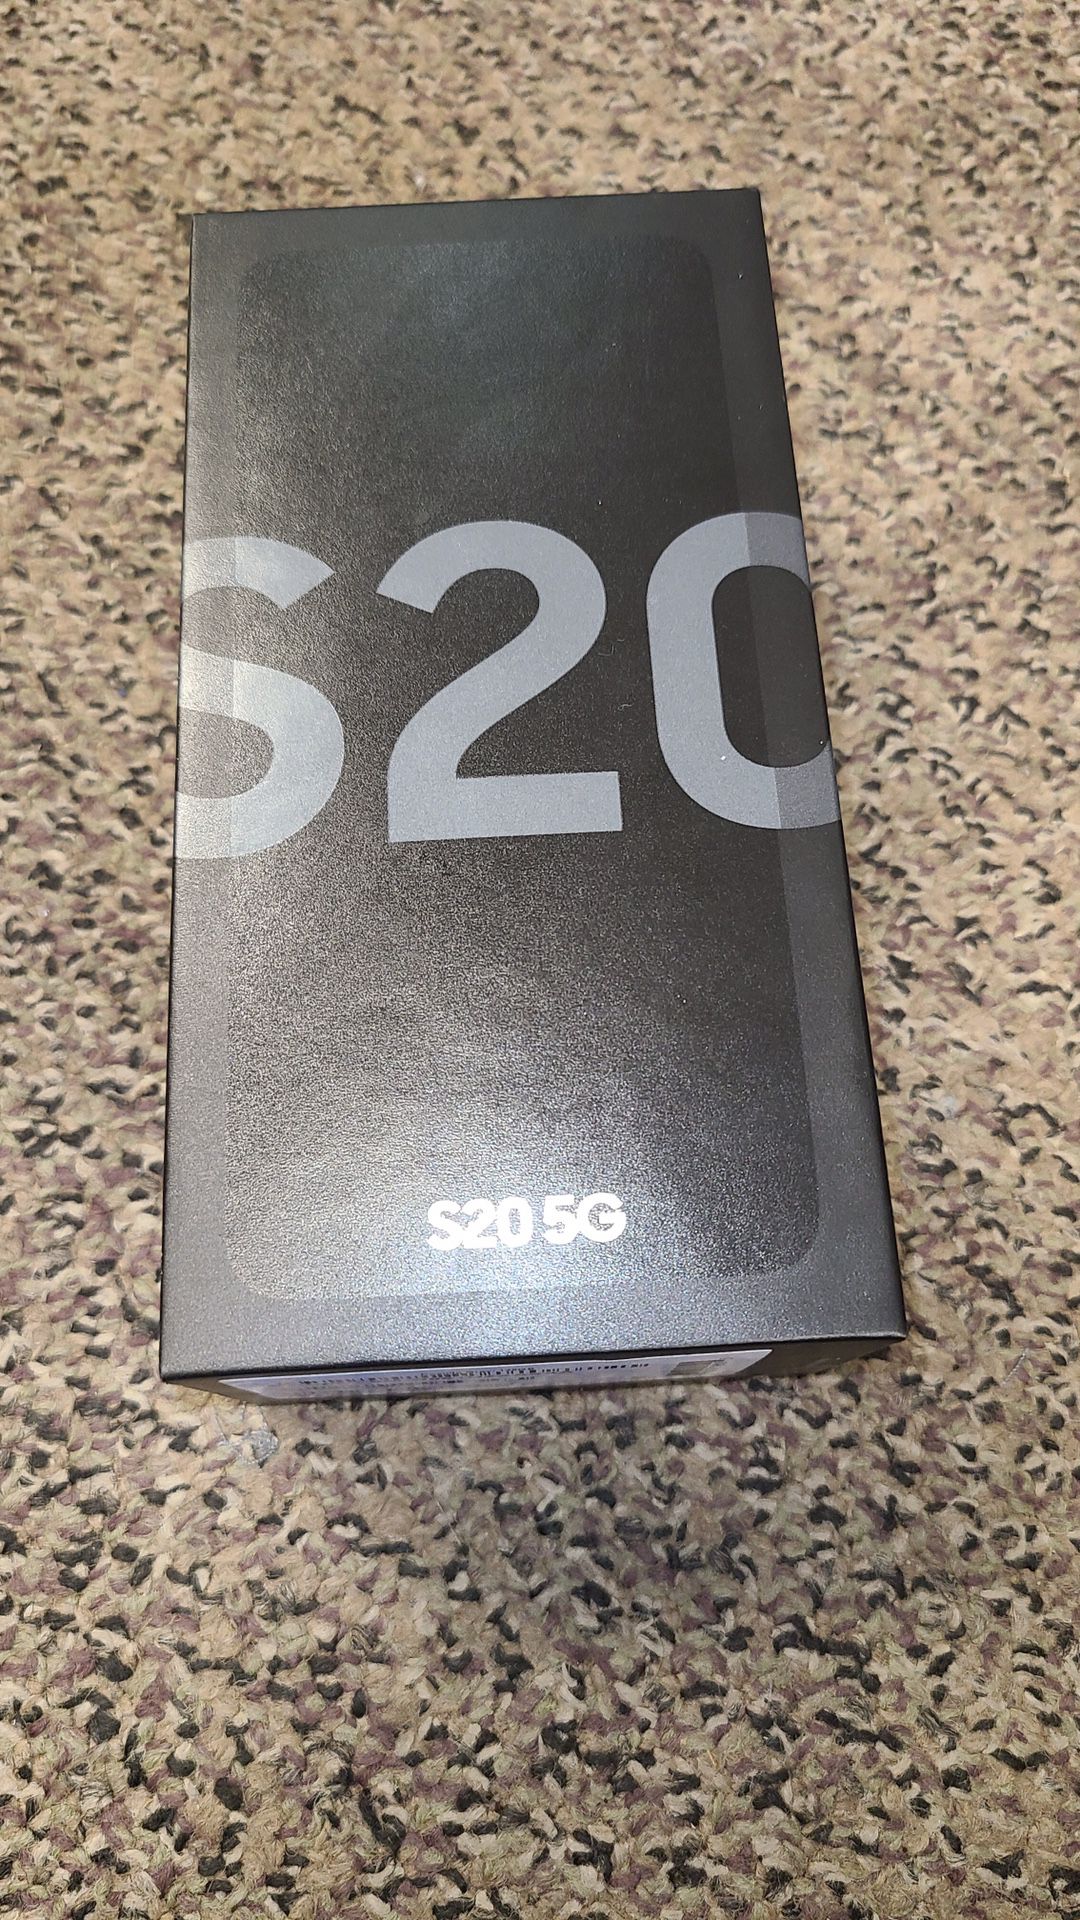 Brand New & Sealed Galaxy S20 5G Cosmic Gray 128 GB unlocked